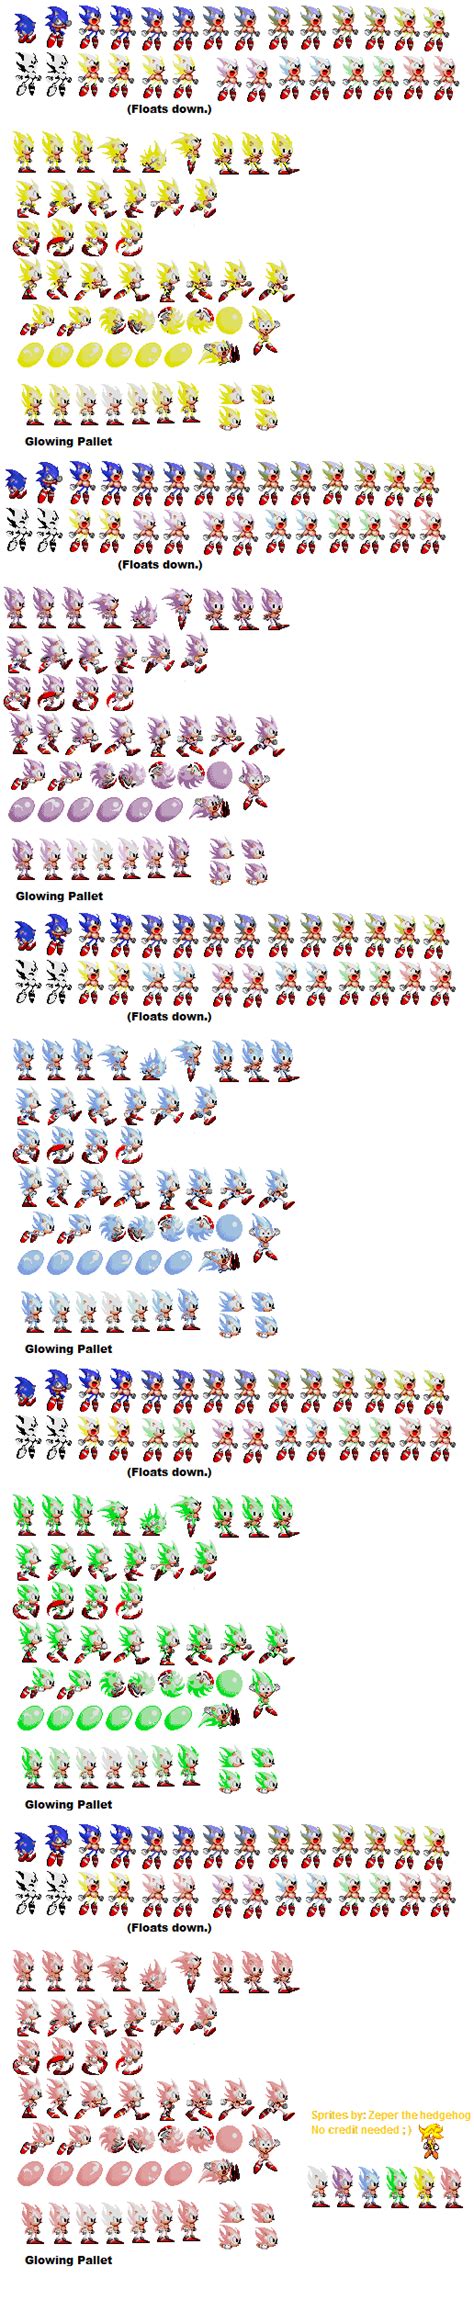 Hyper Sonic And Dark Sonic Custom Sprites Mania Sonicthehedgehog Images